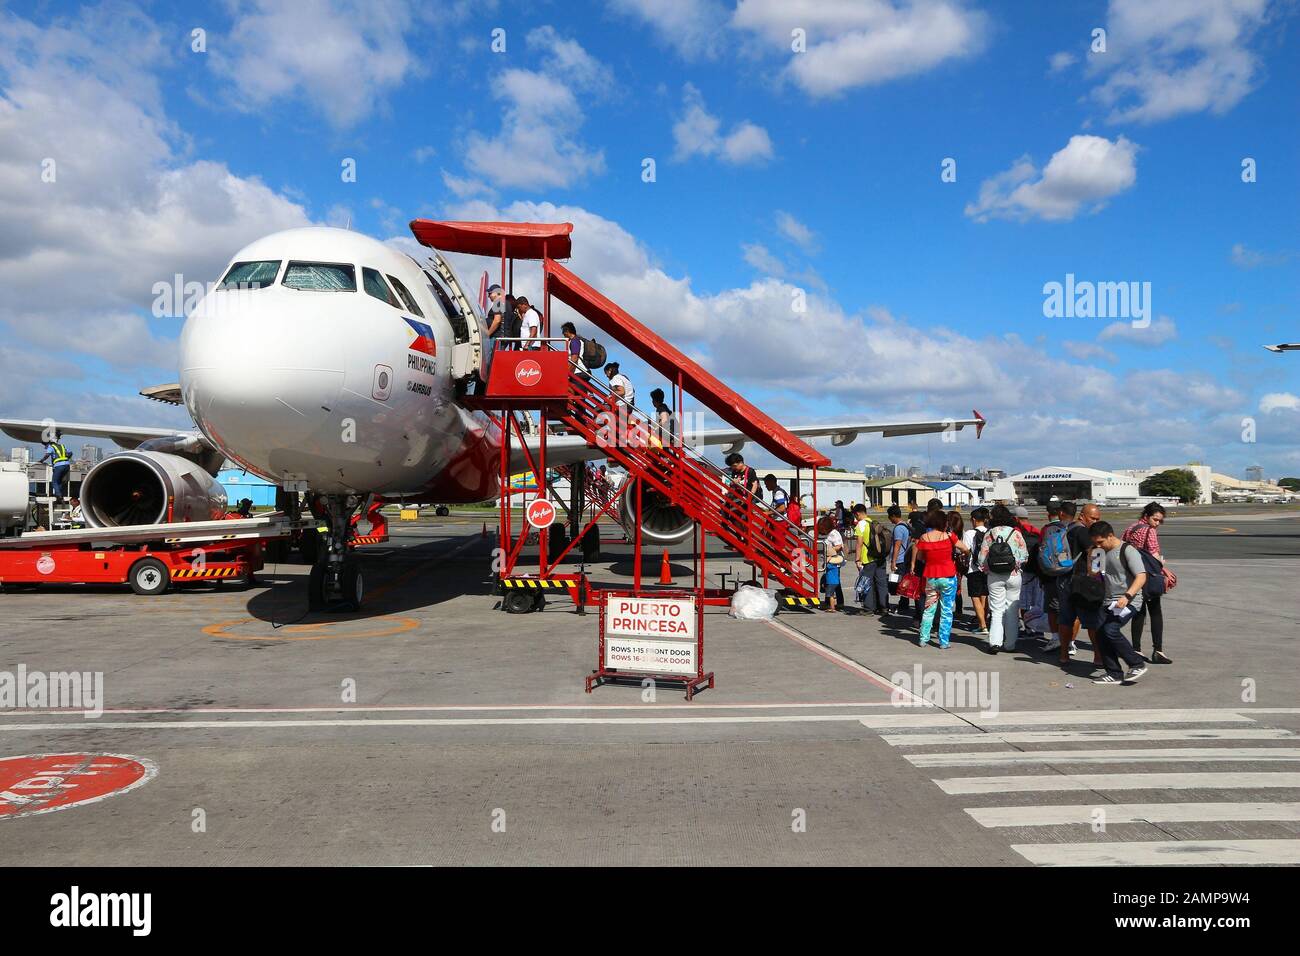 MANILA, PHILIPPINES - NOVEMBER 28, 2017: Passengers board Air Asia Airbus A320 at Ninoy Aquino International Airport (NAIA), Manila. The airport handl Stock Photo